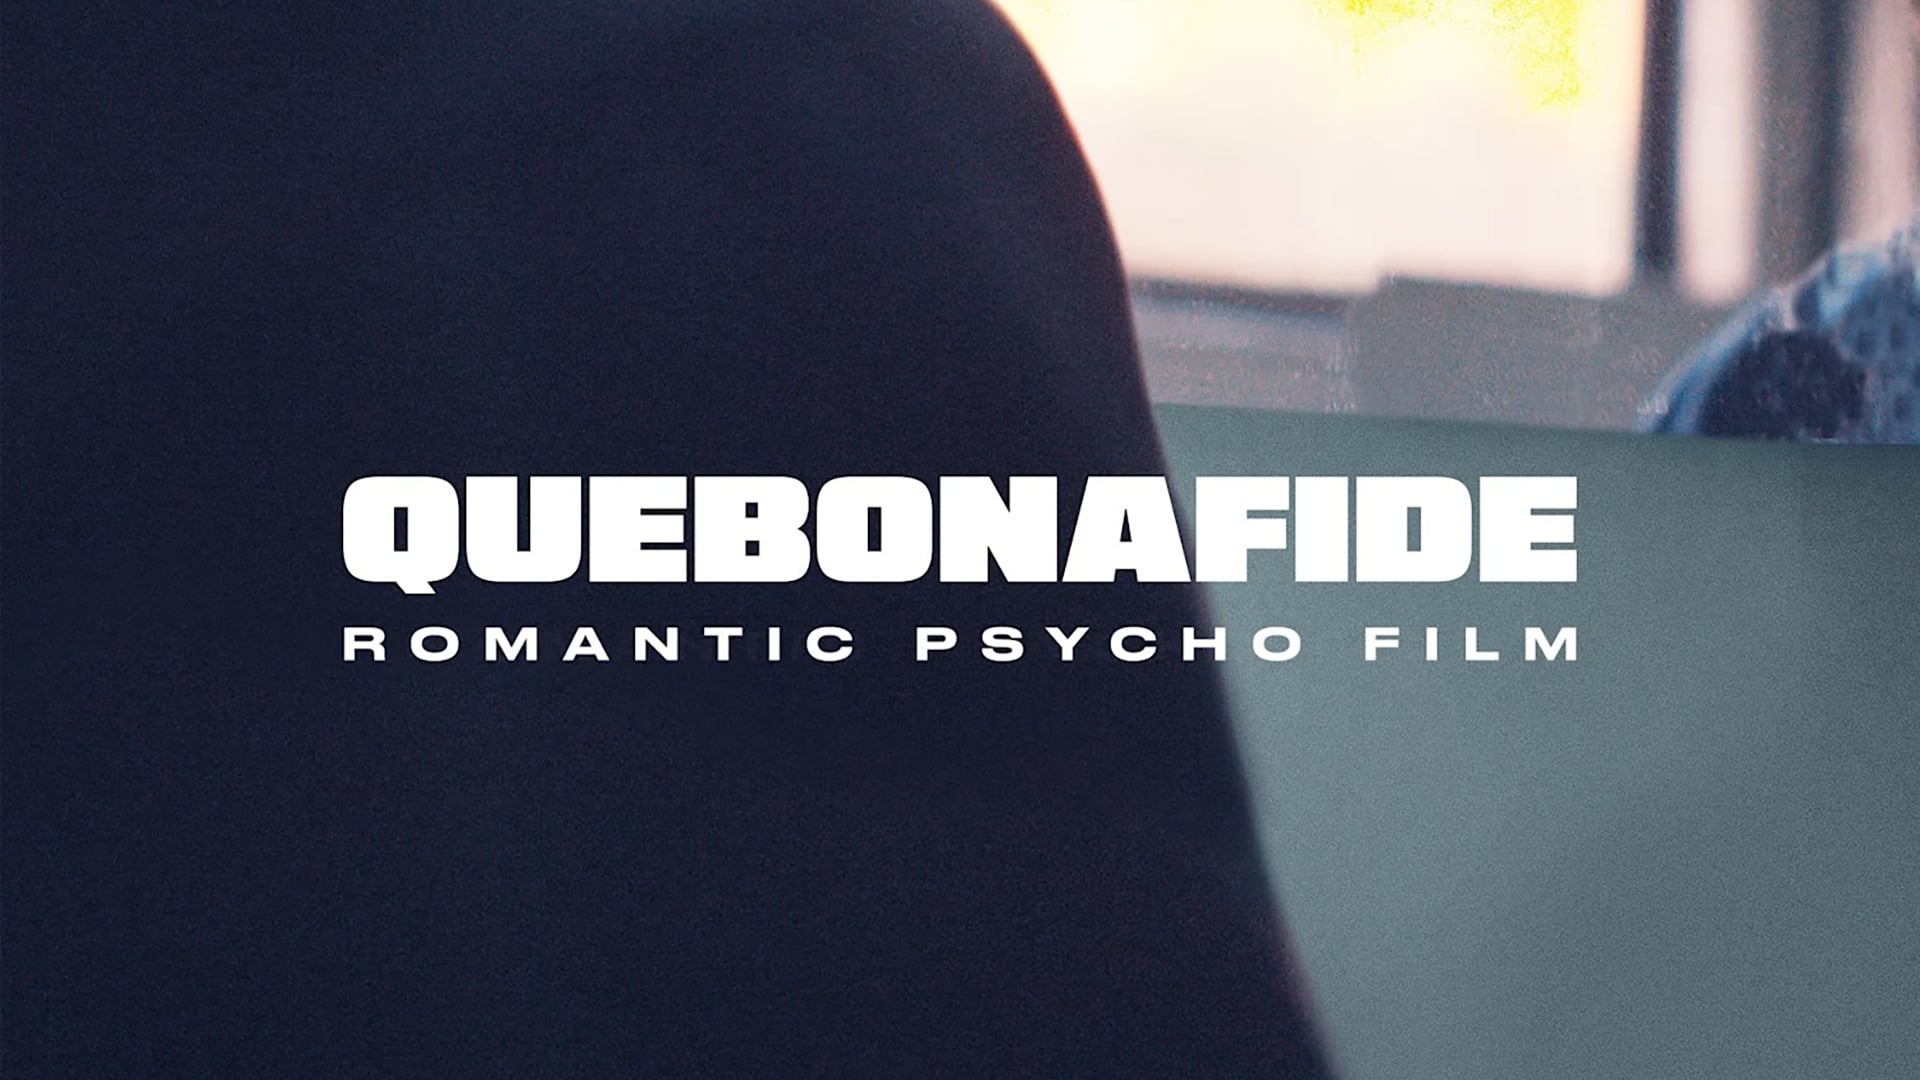 Quebonafide: Romantic Psycho Film (2020)